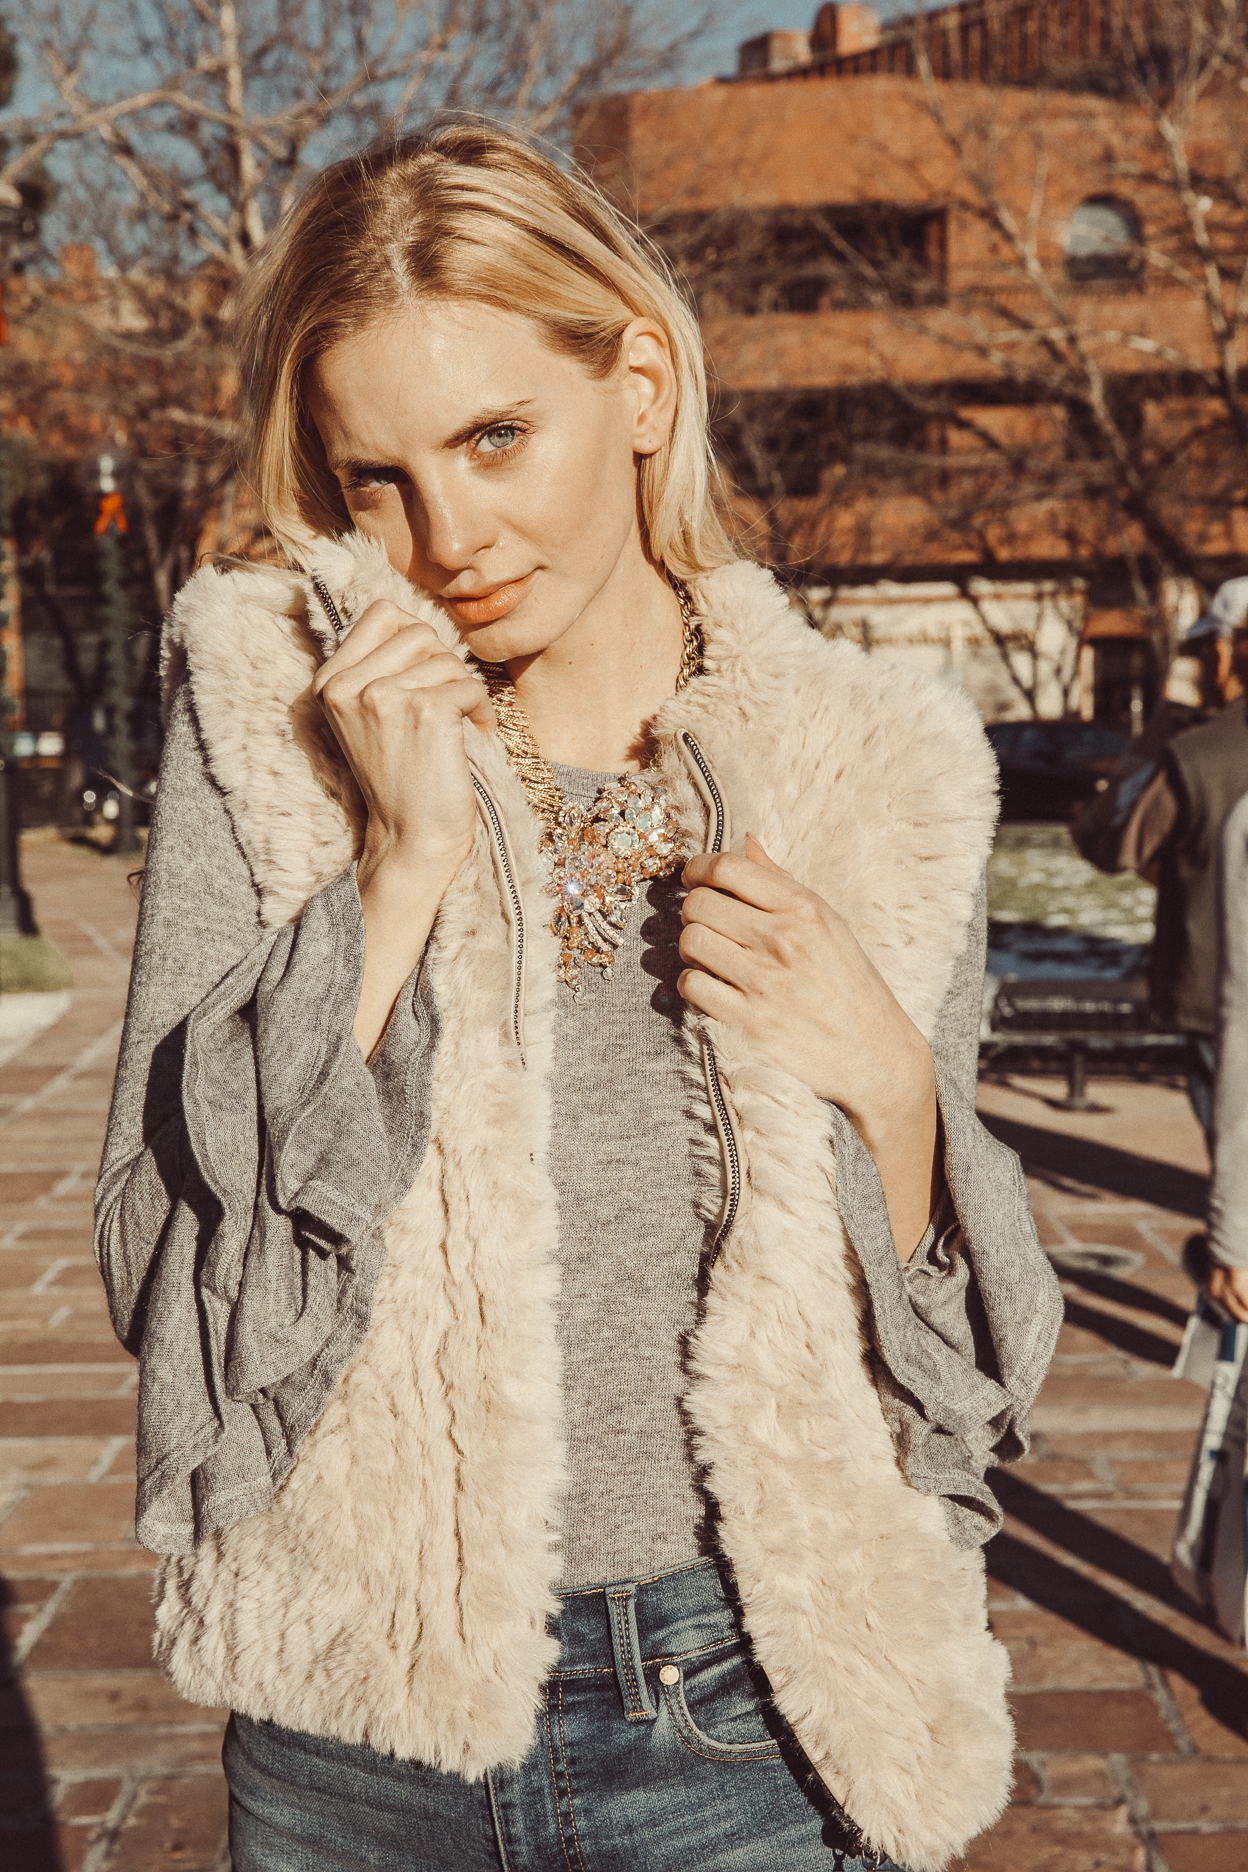 Model wearing statement vintage necklace with sunstones